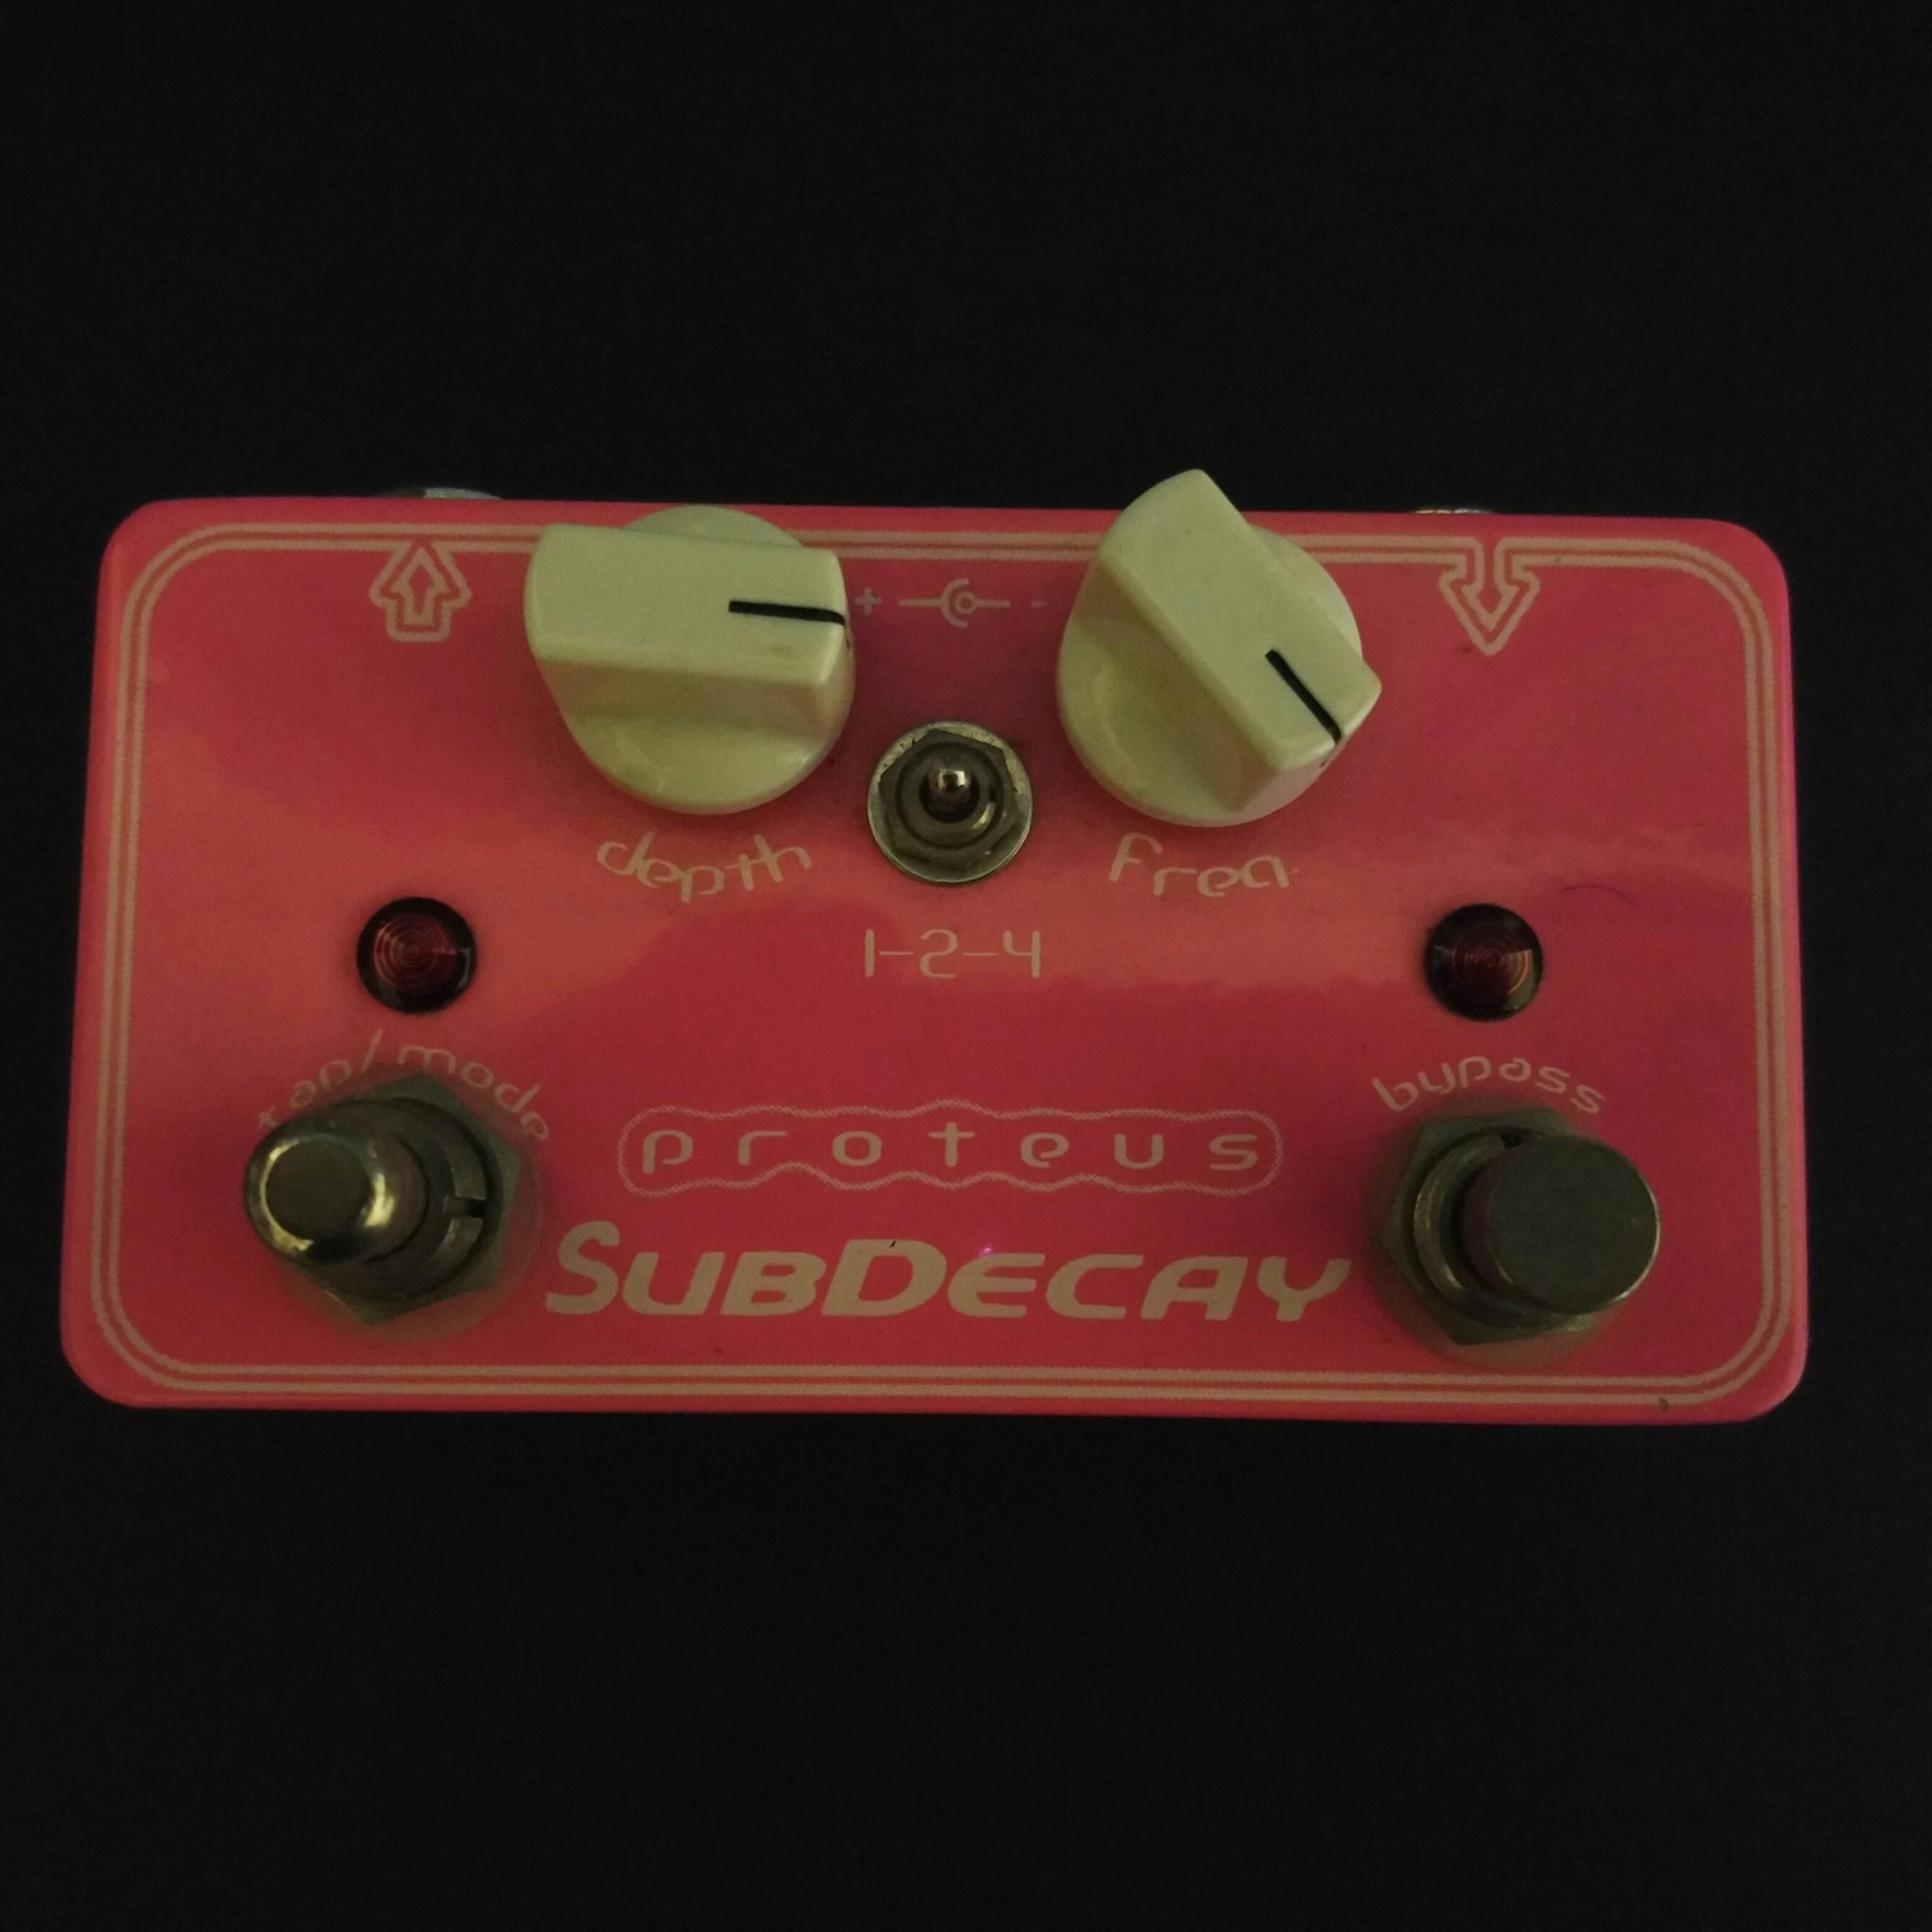 Subdecay Proteus Auto Filter Guitar Pedal, Hobbies & Toys, Music